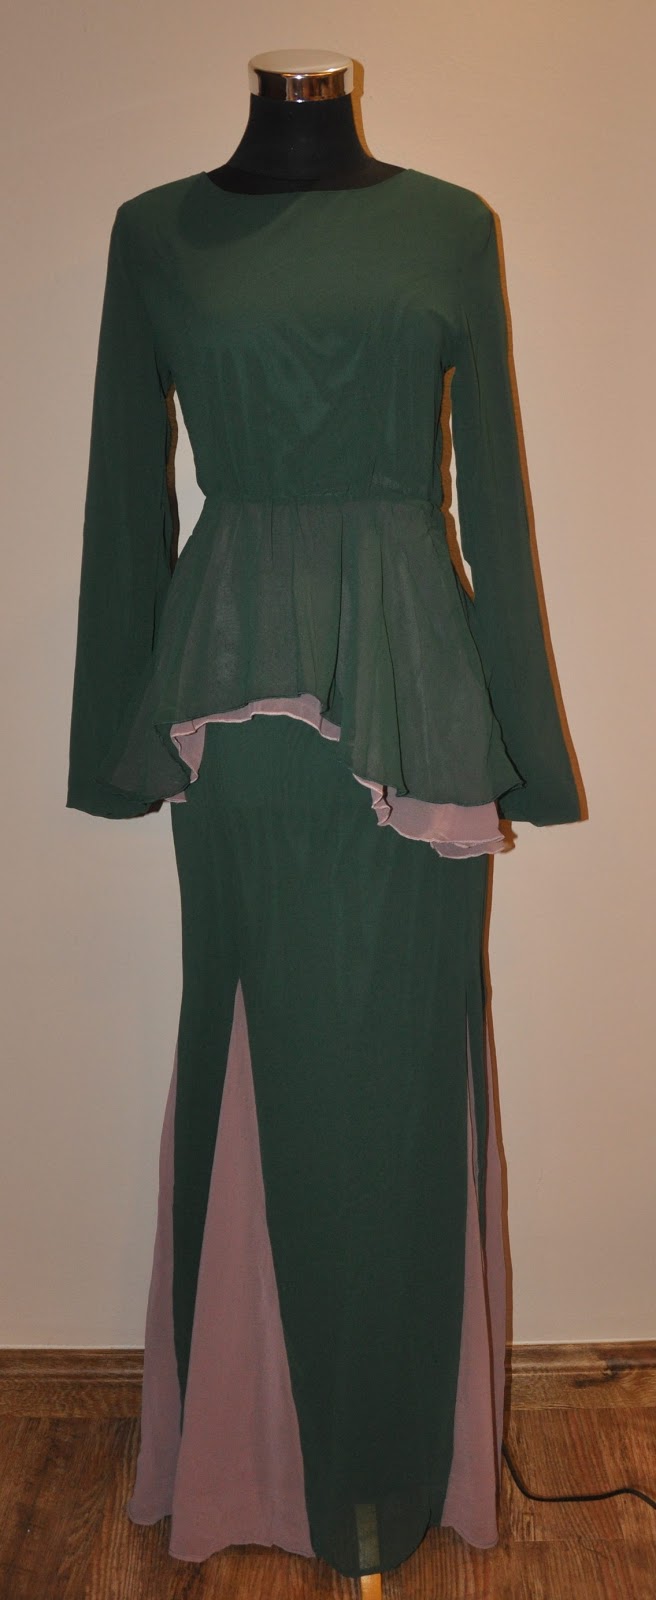 Abyela Etonnante Boutique: Purplum Dress